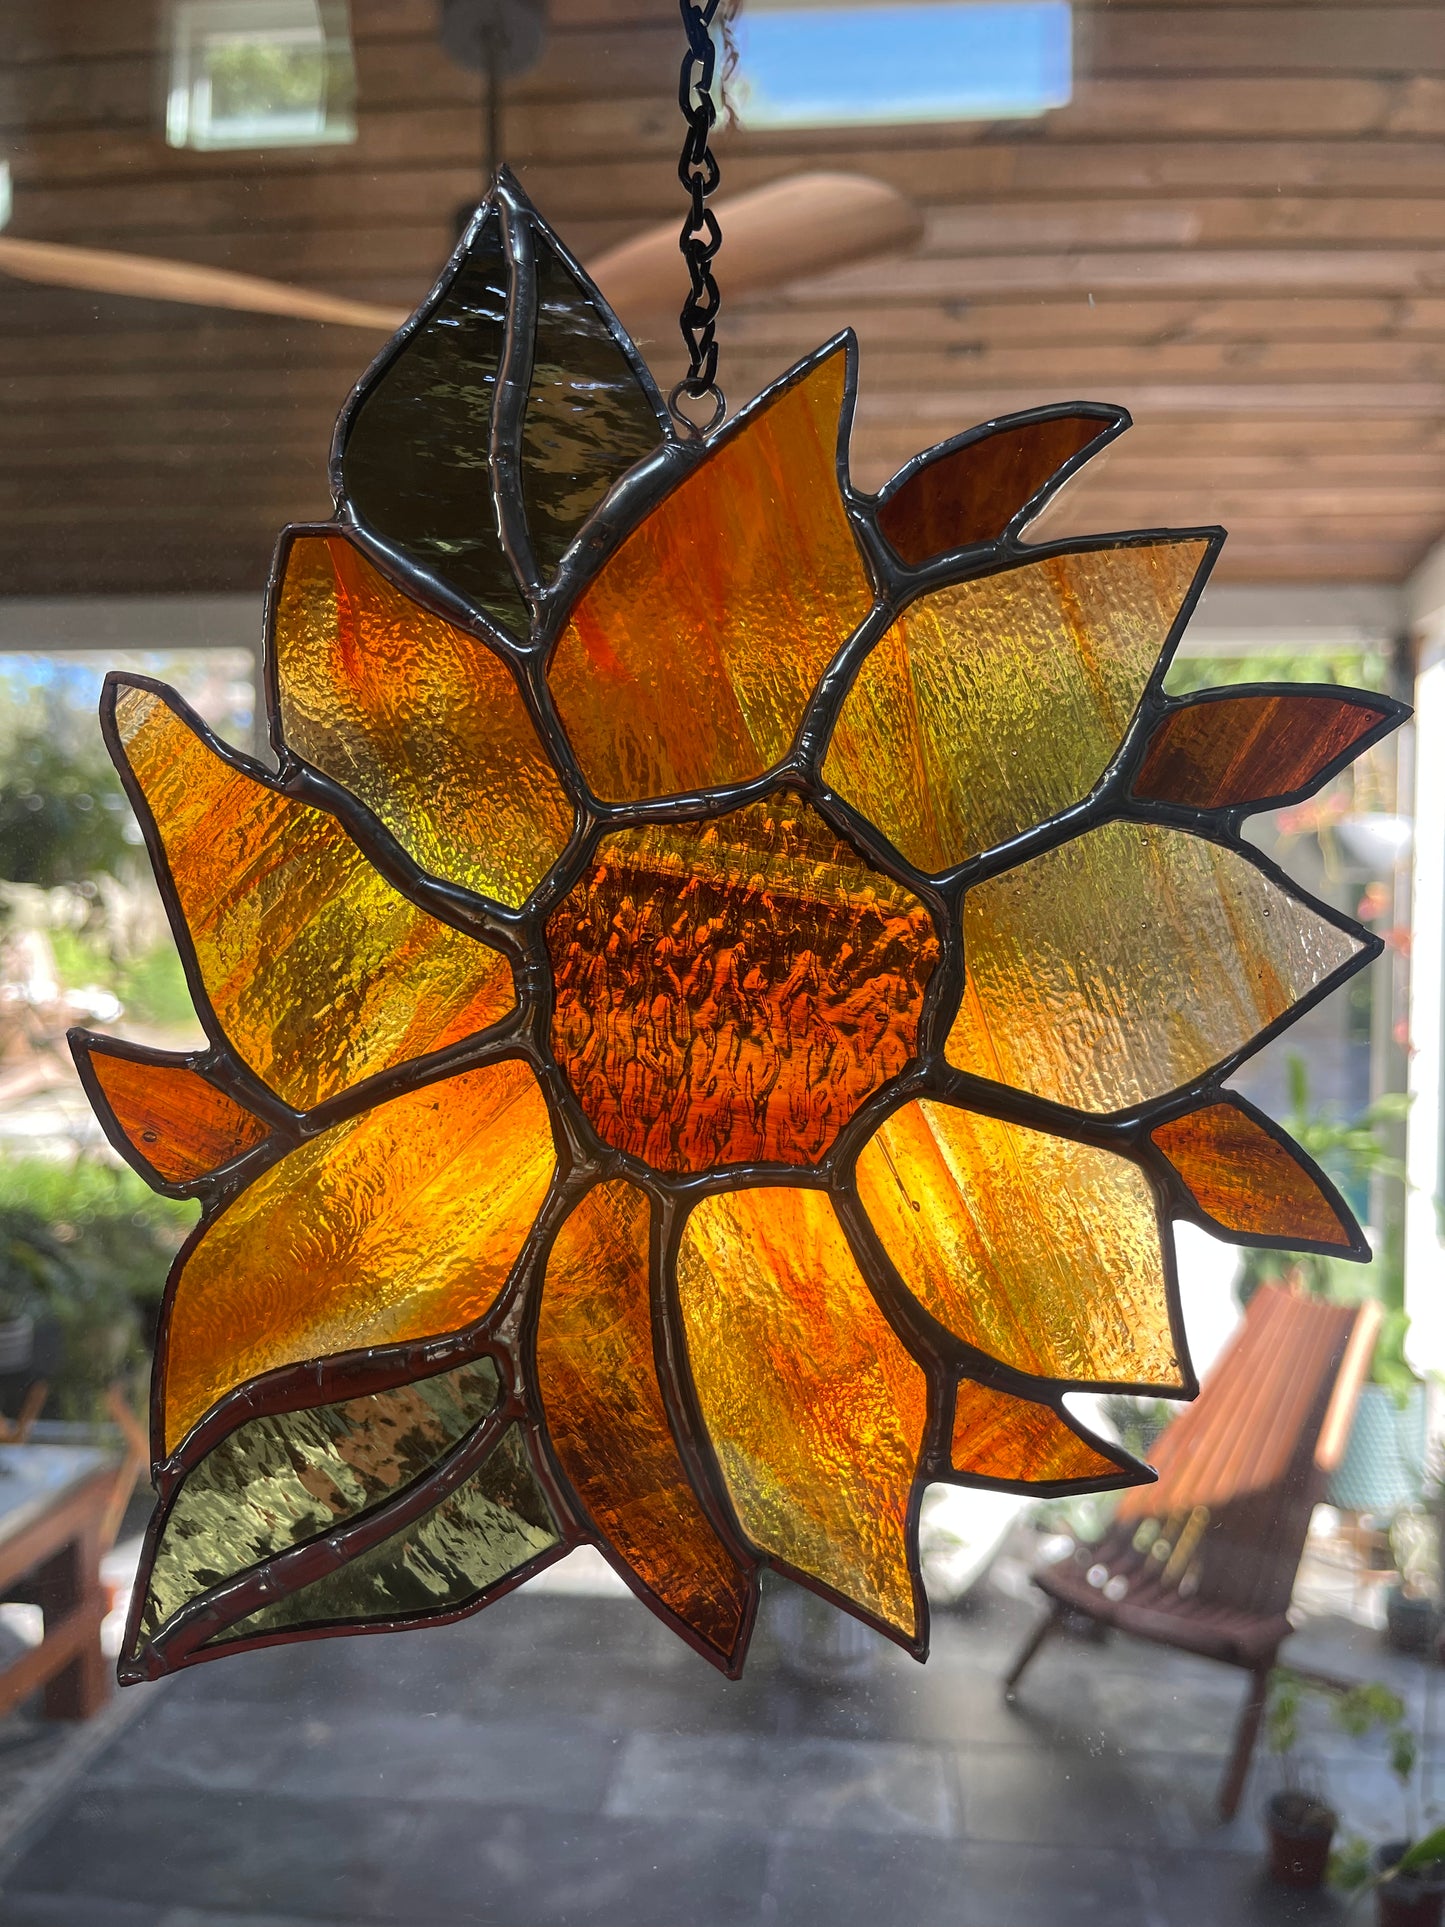 Large Sunflower